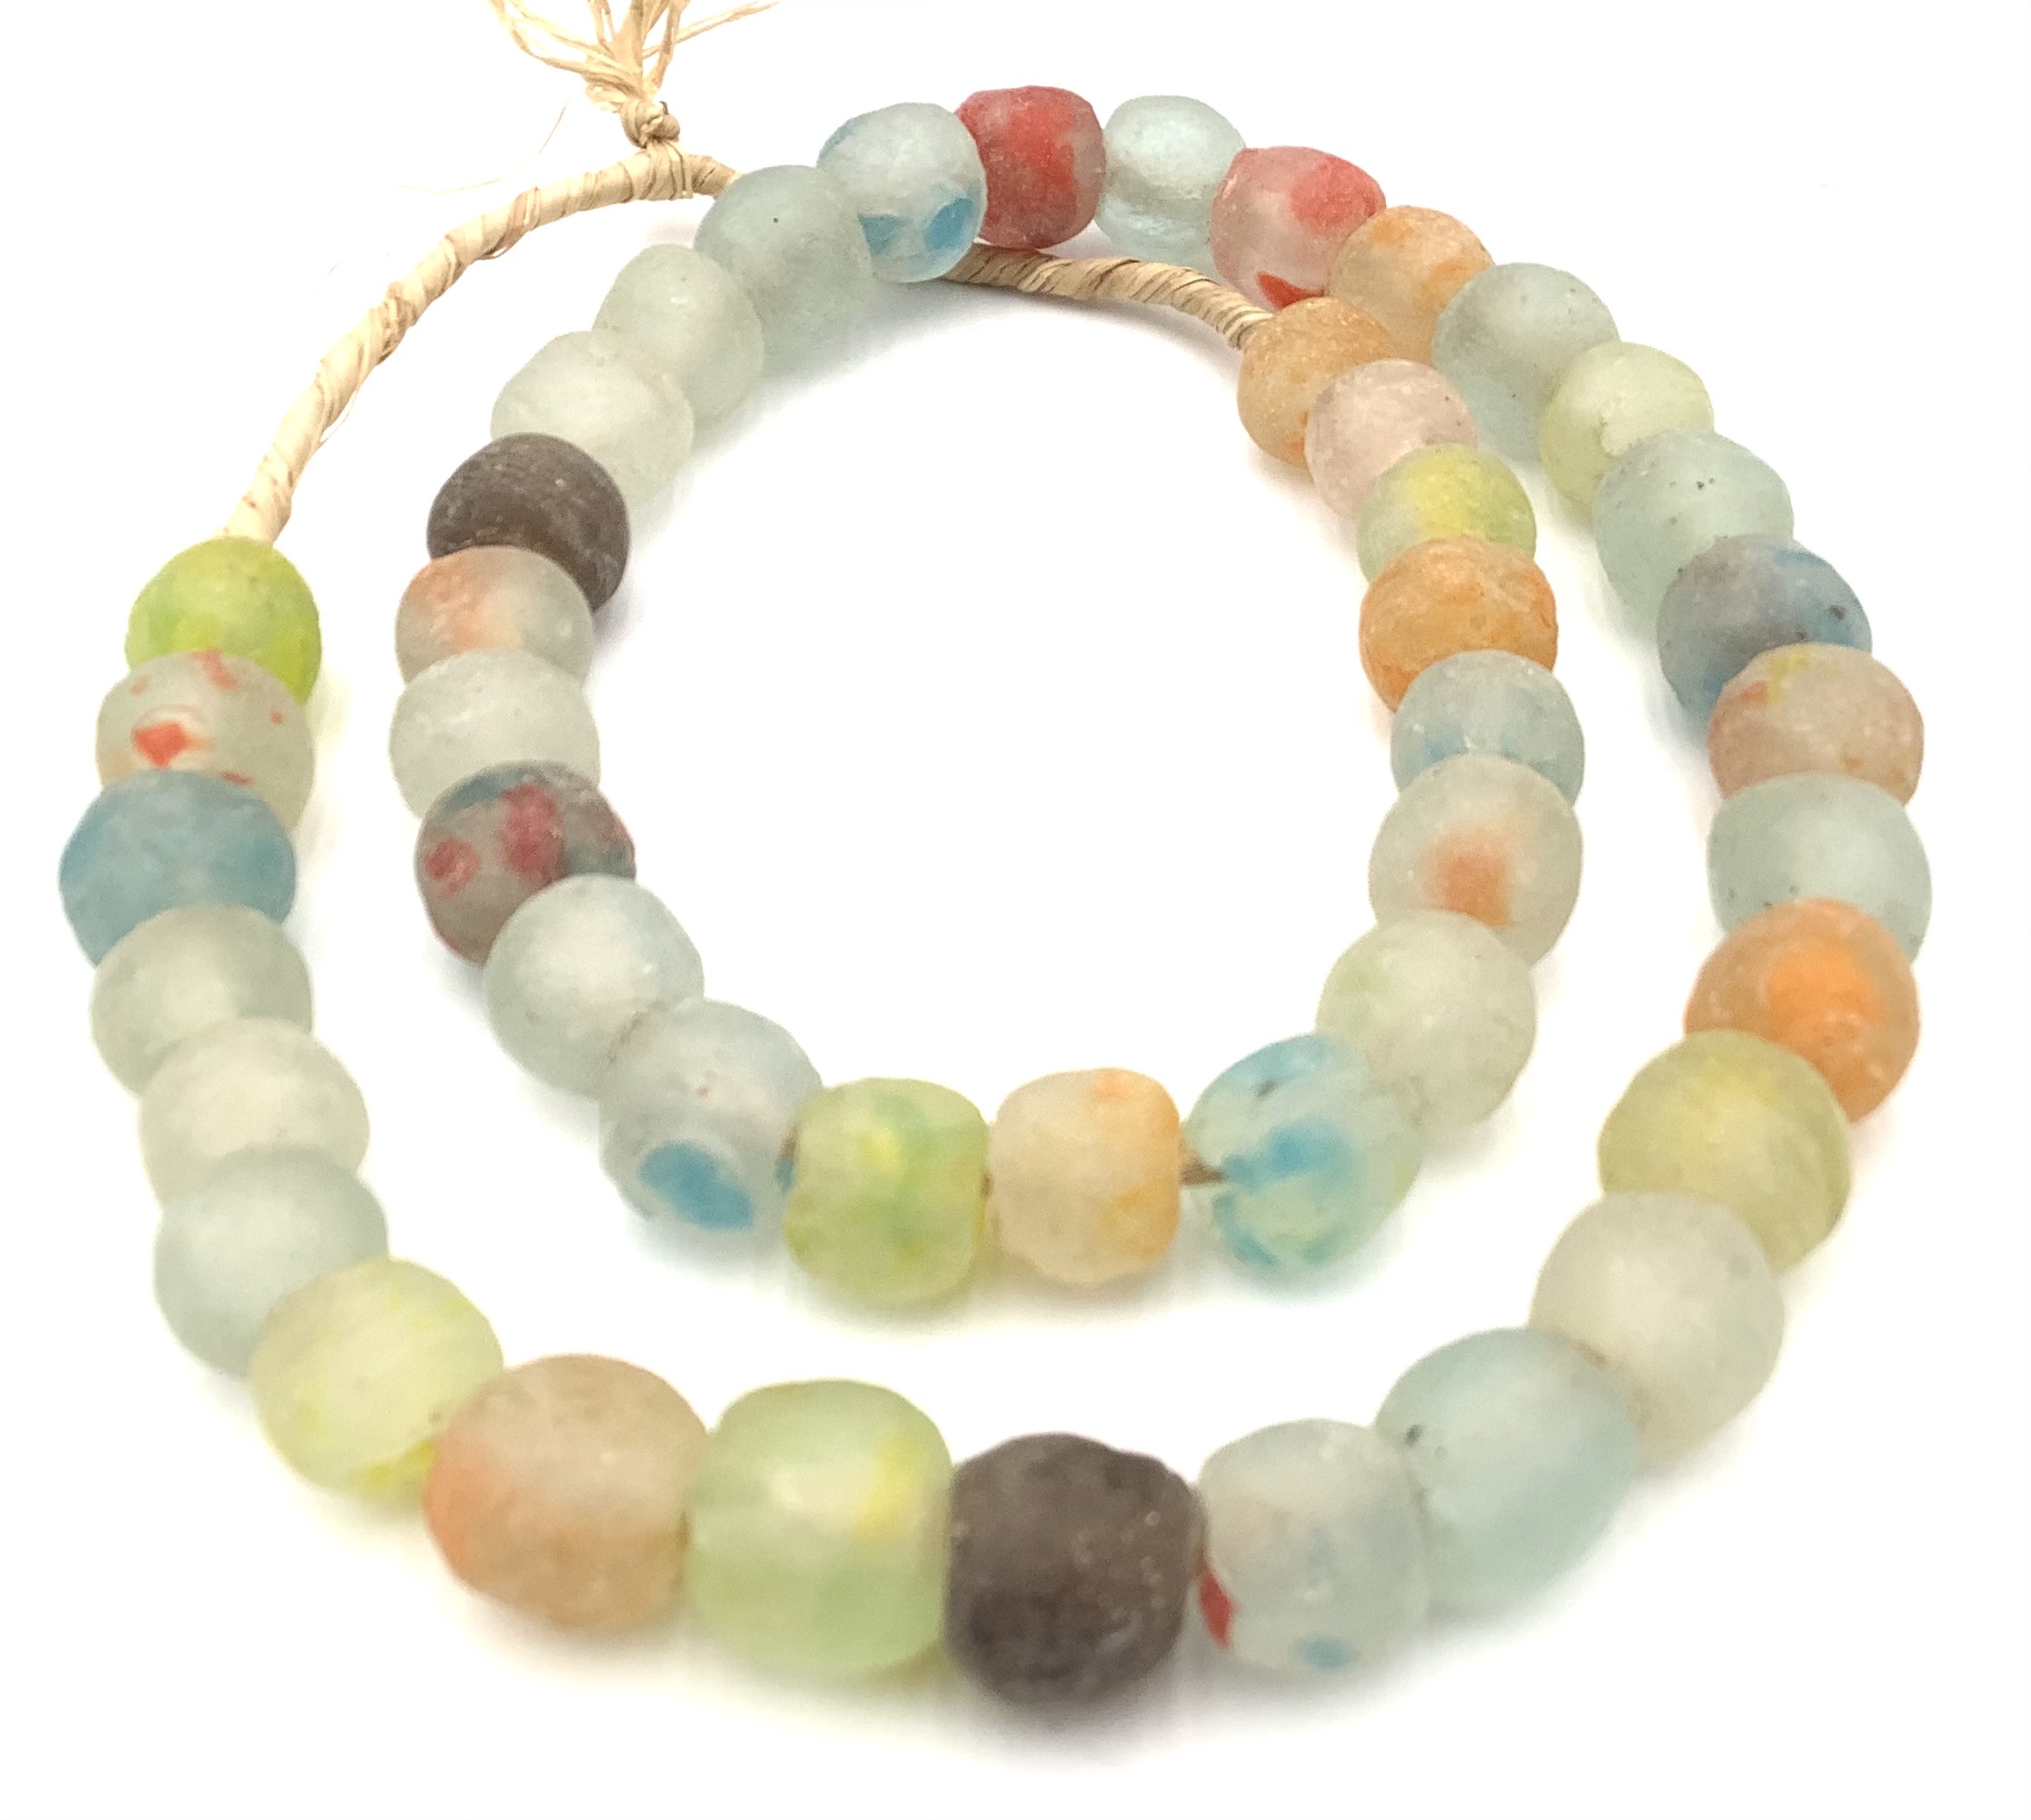 Krobo Altglas Glasperlen Pulverglasper Handel Perlen Afrika Ghana Trade Beads 